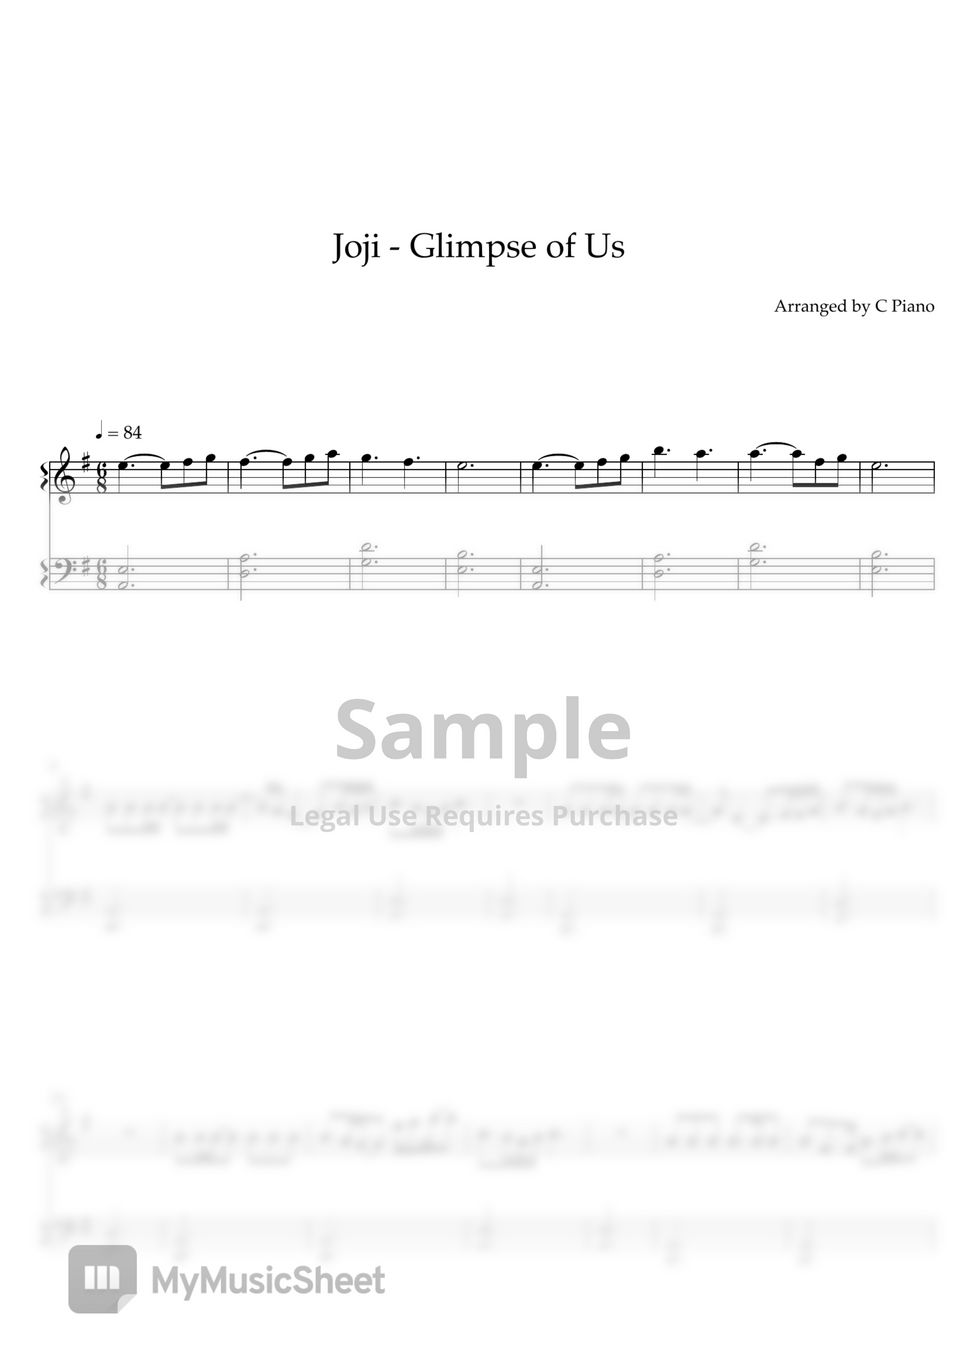 Joji - Glimpse of Us (Easy Version) by C Piano